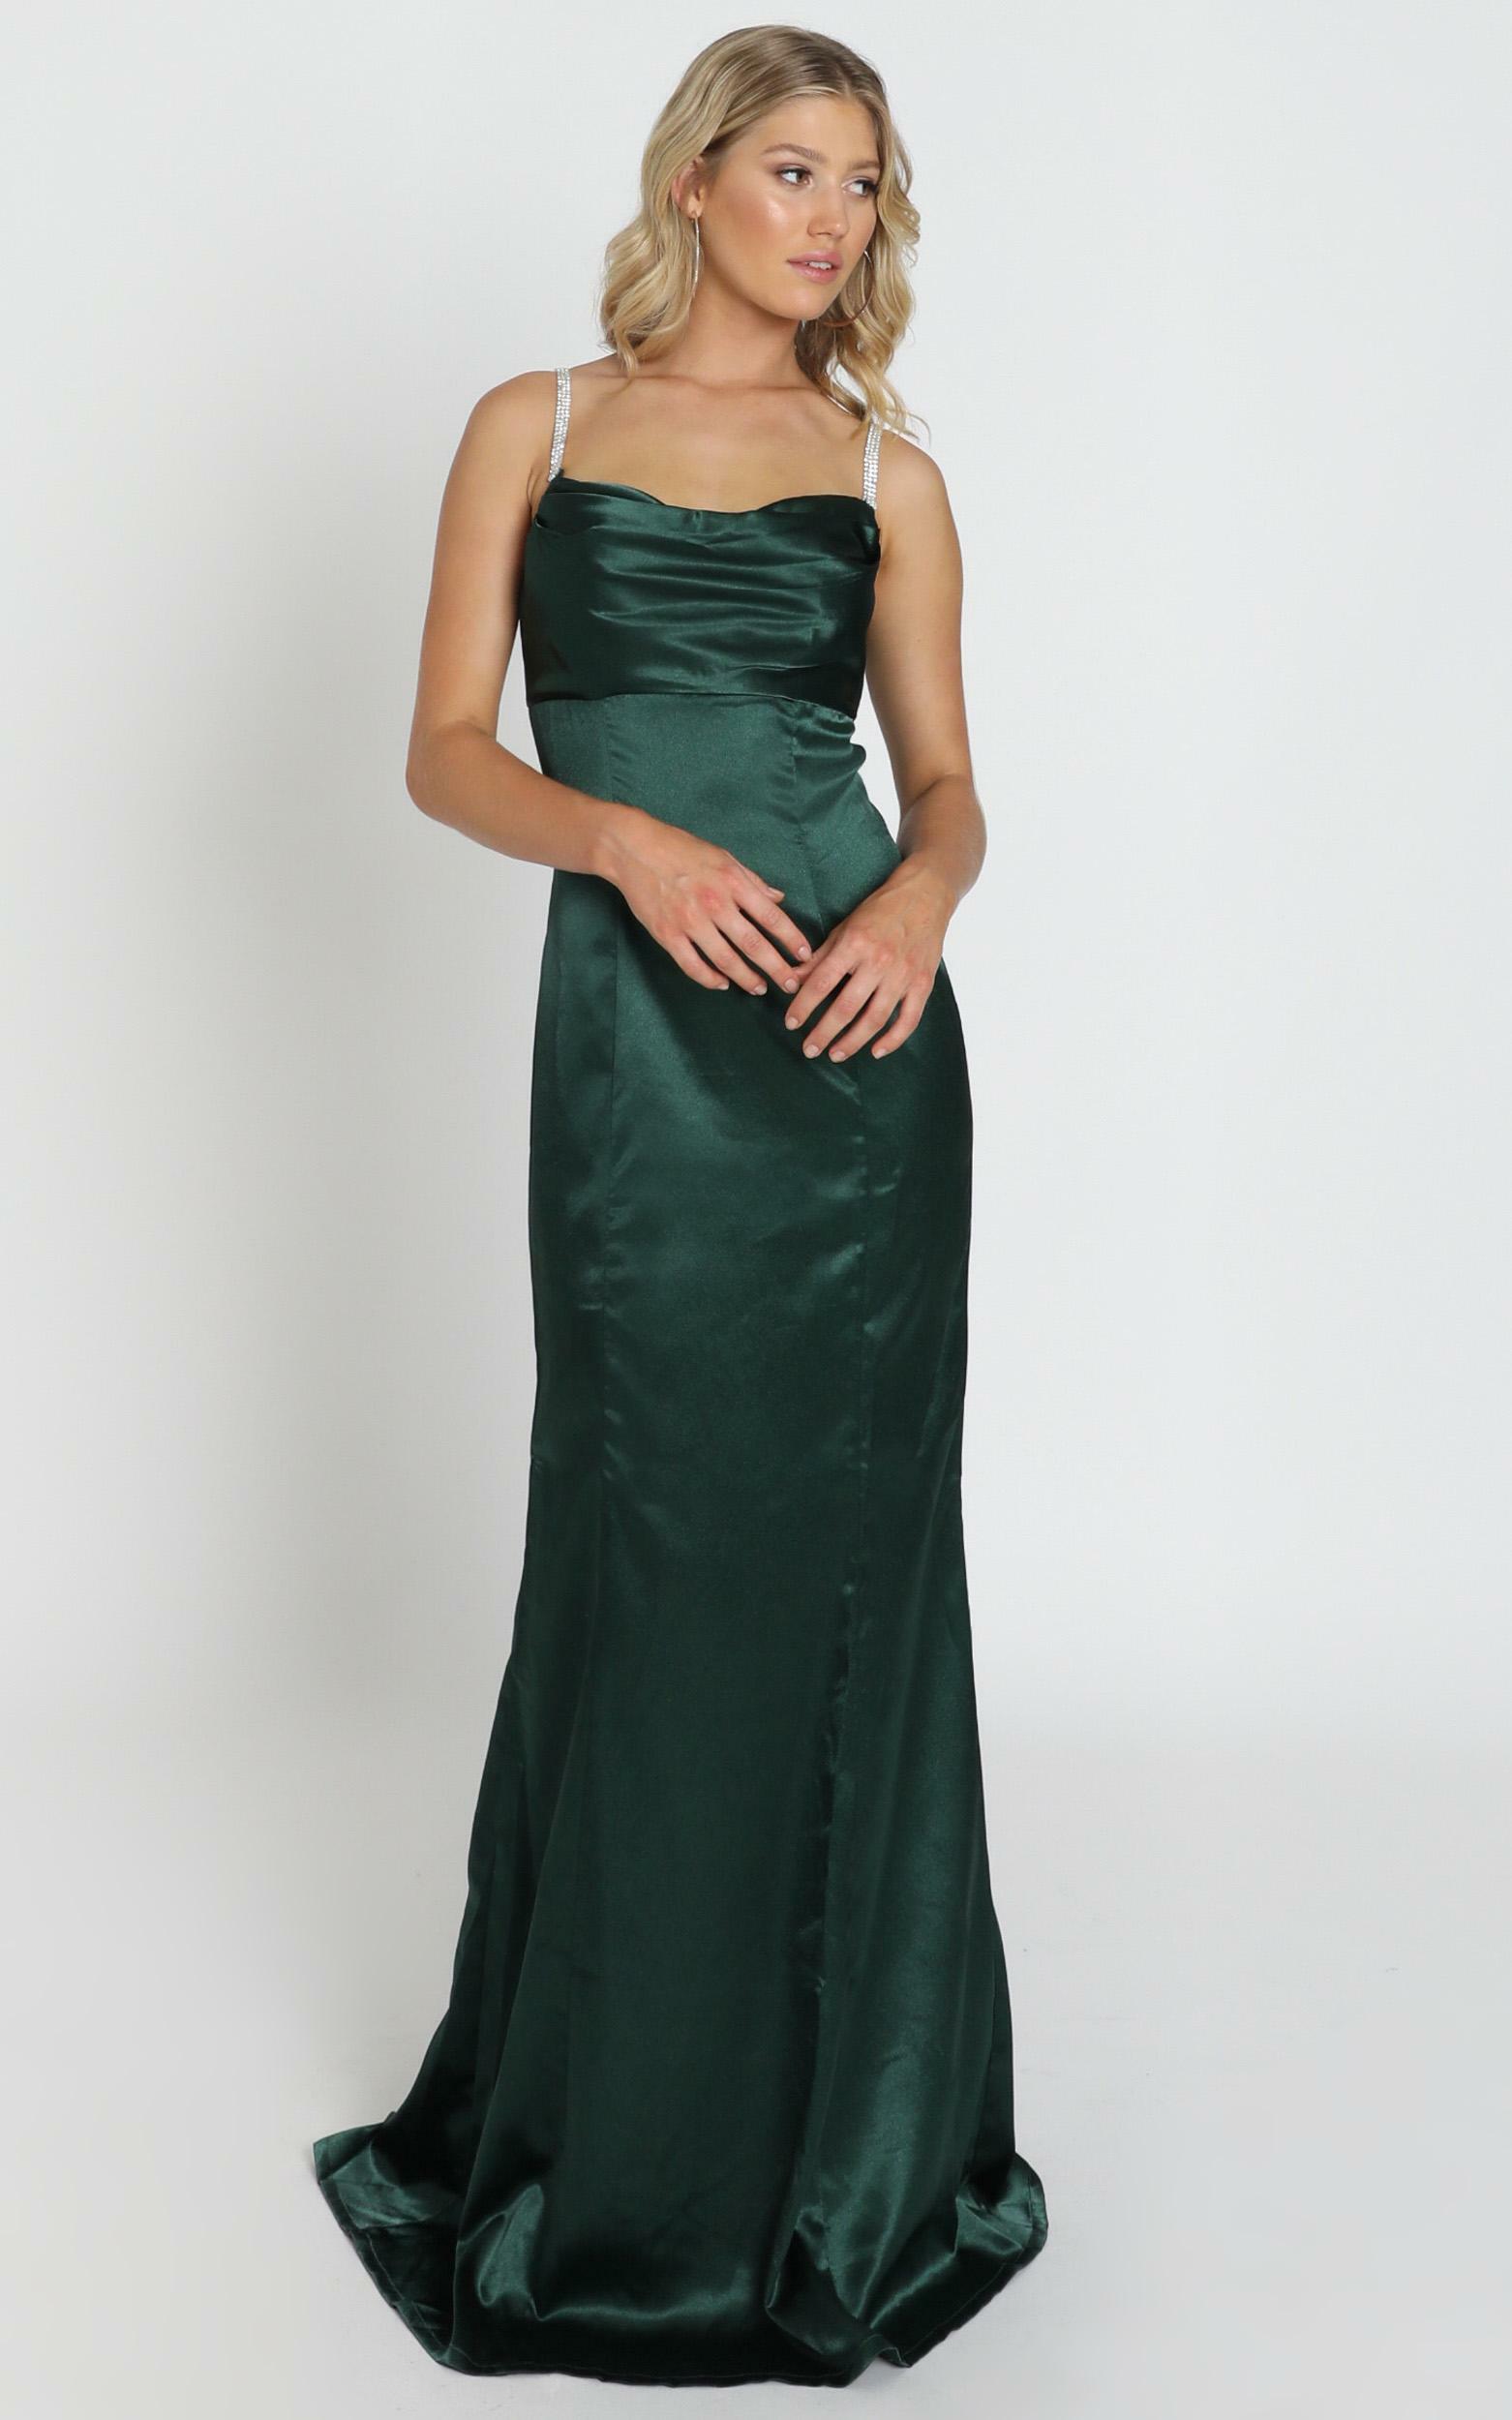 Alysha Diamante Strap Maxi Dress In emerald green satin - 8 (S), Green, hi-res image number null